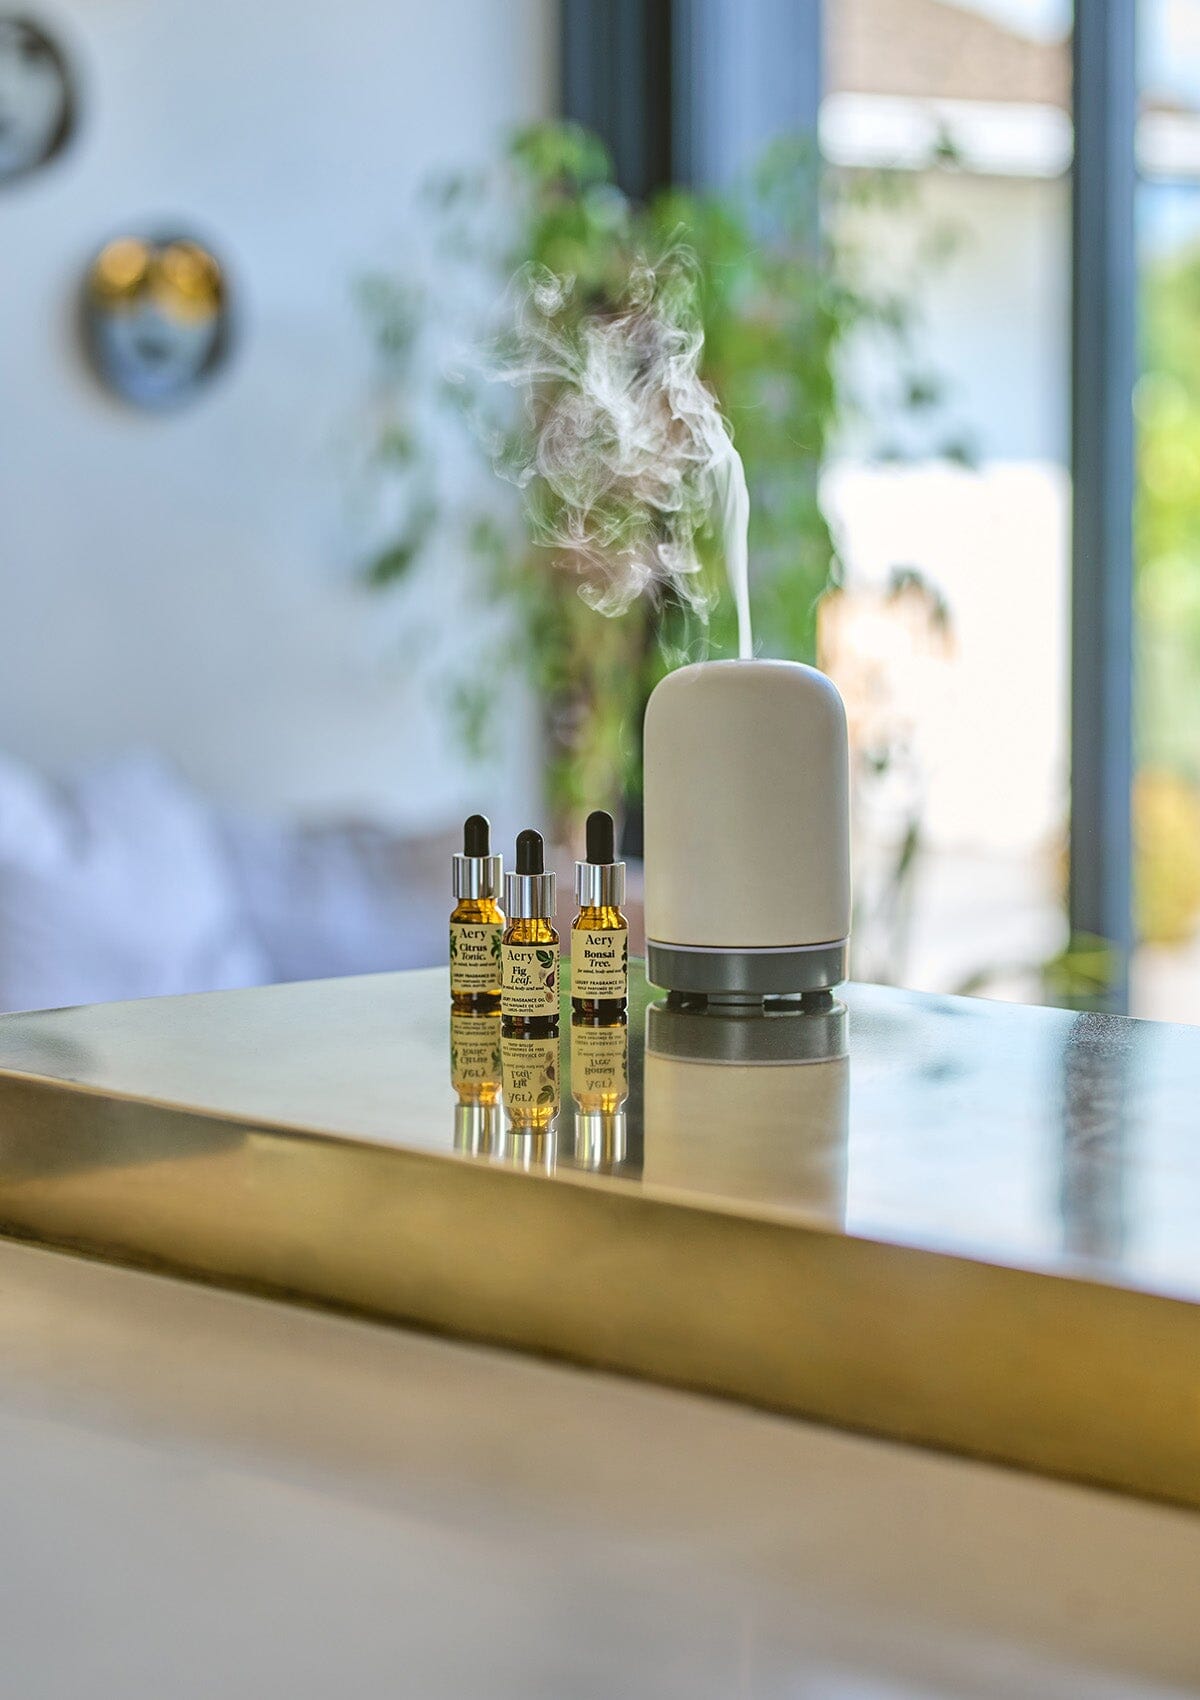 Botanical fragrance oils by aery sat on gold kitchen worktop